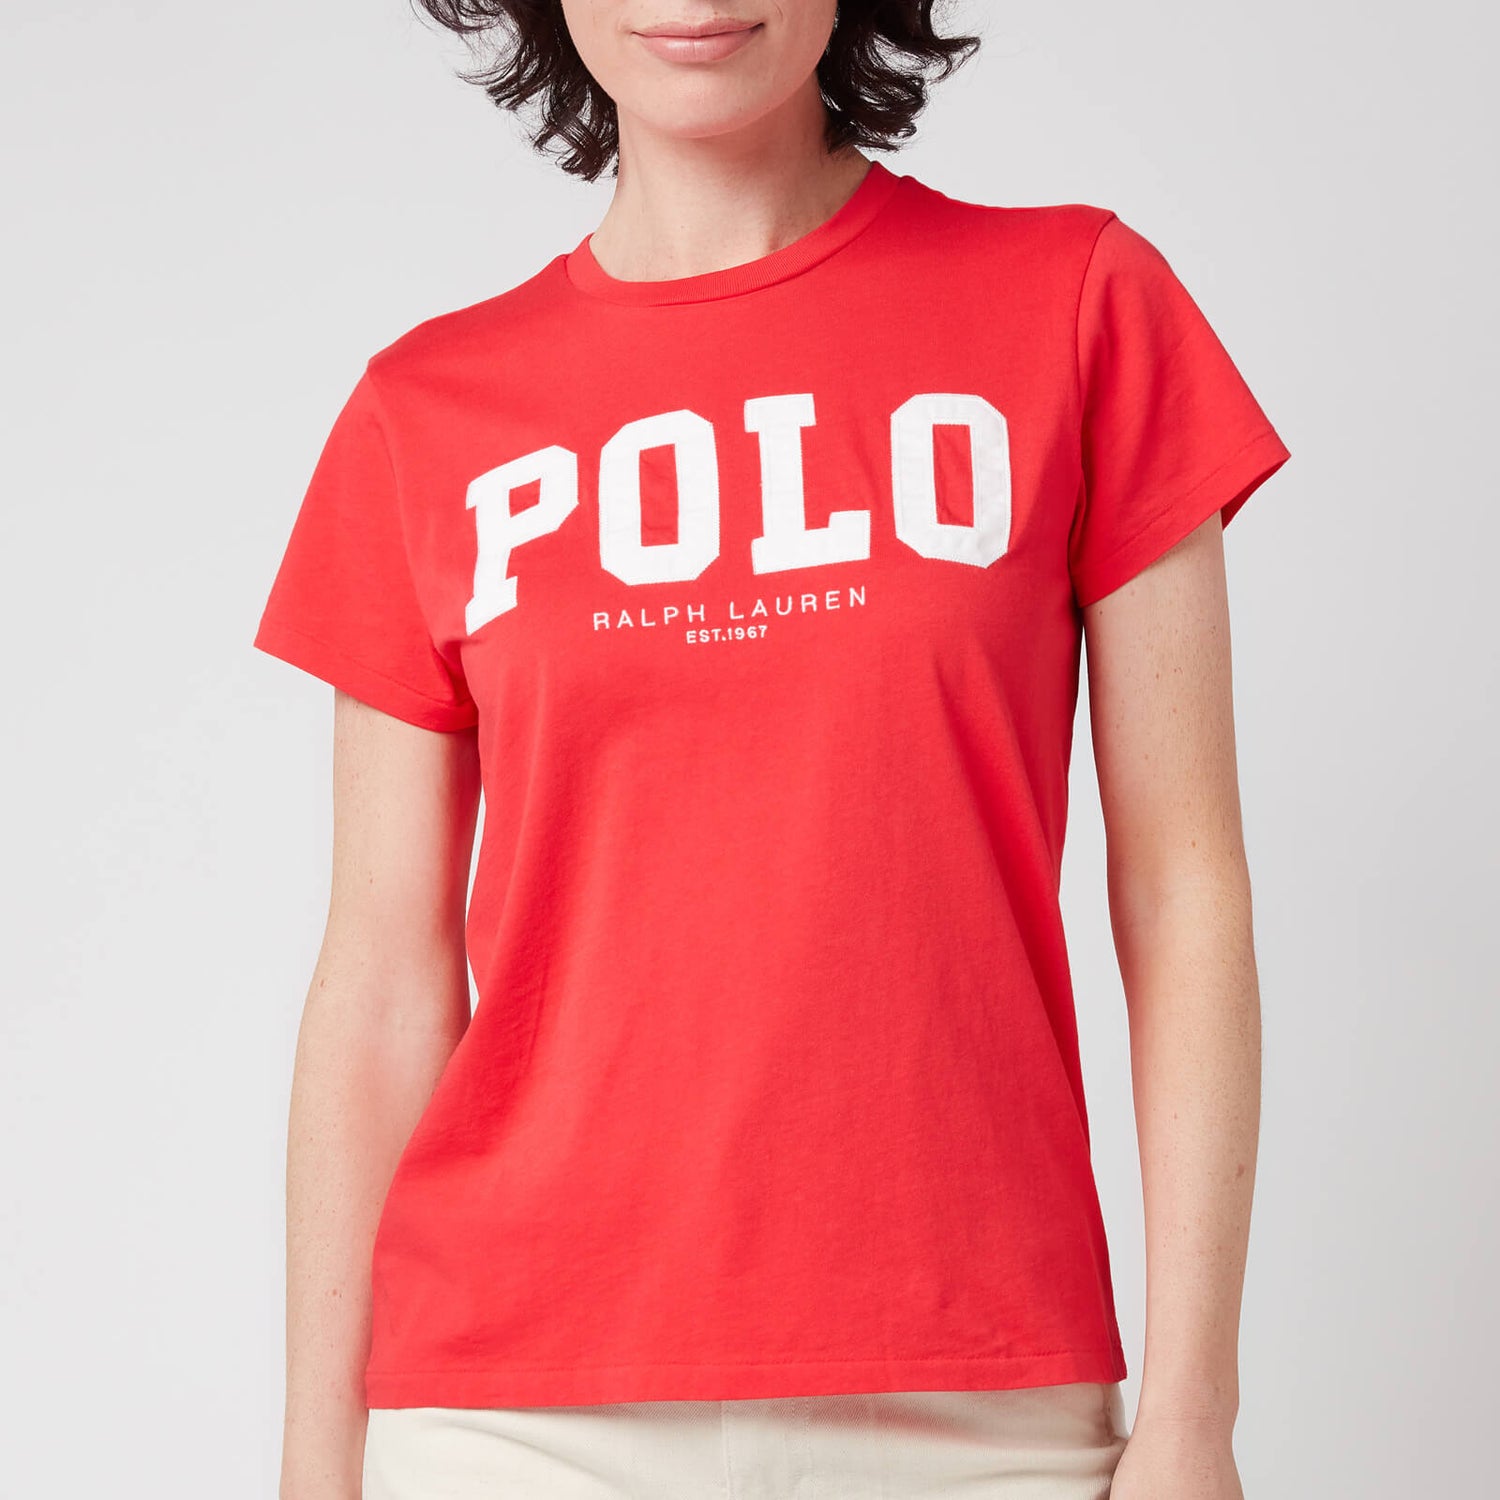 Polo Ralph Lauren Women's Polo Logo T-Shirt - Bright Hibiscus